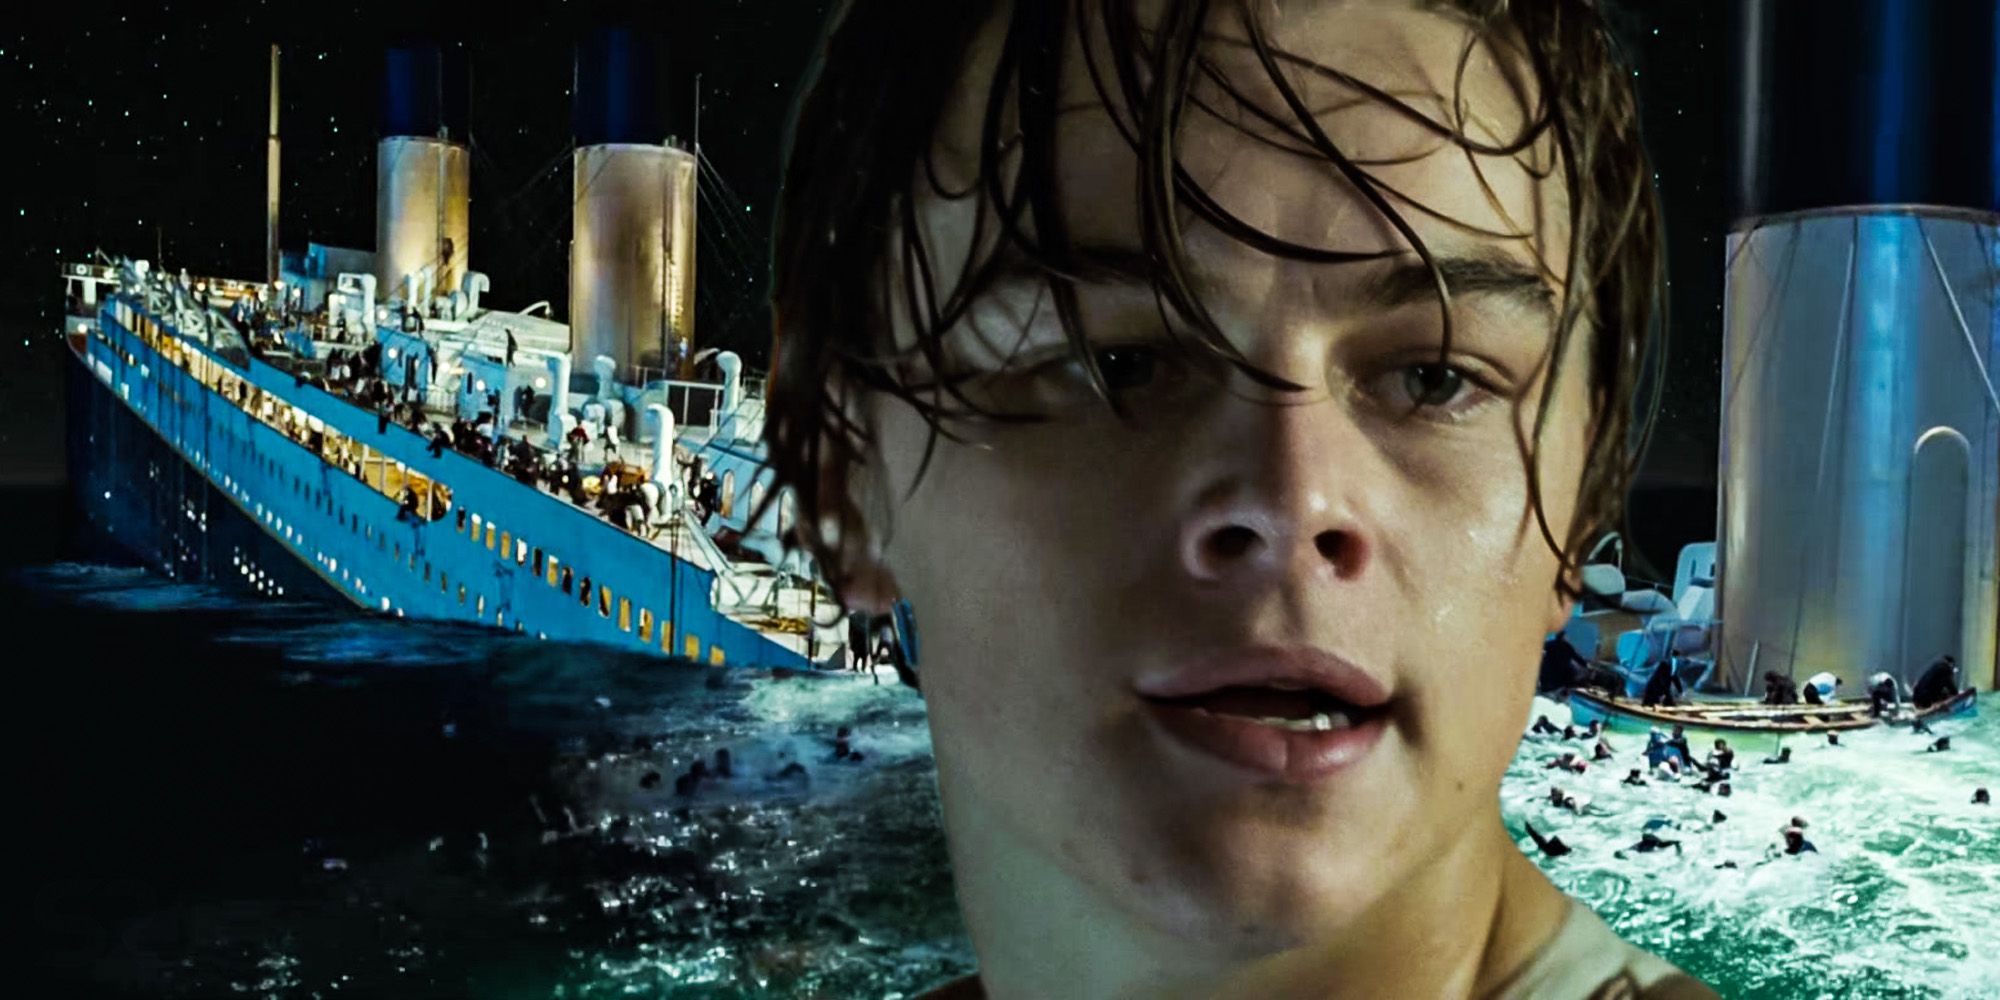 titanic jack drowning